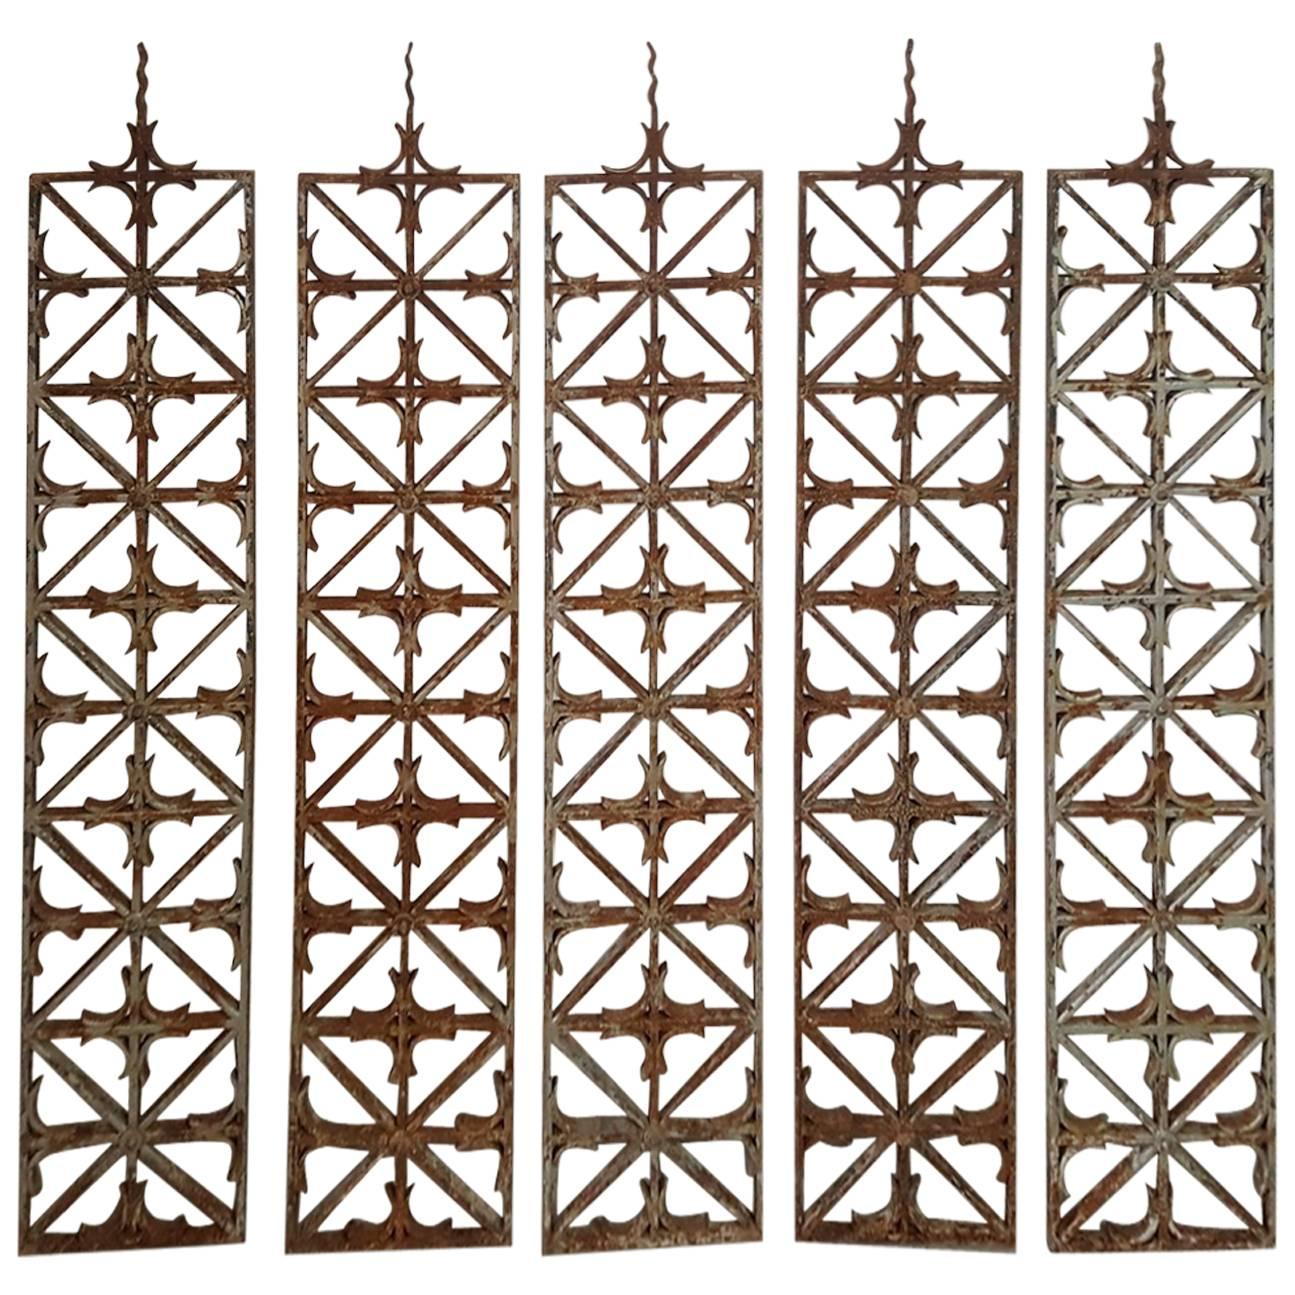 Set of Five Mid-Century Wrought Iron Panels